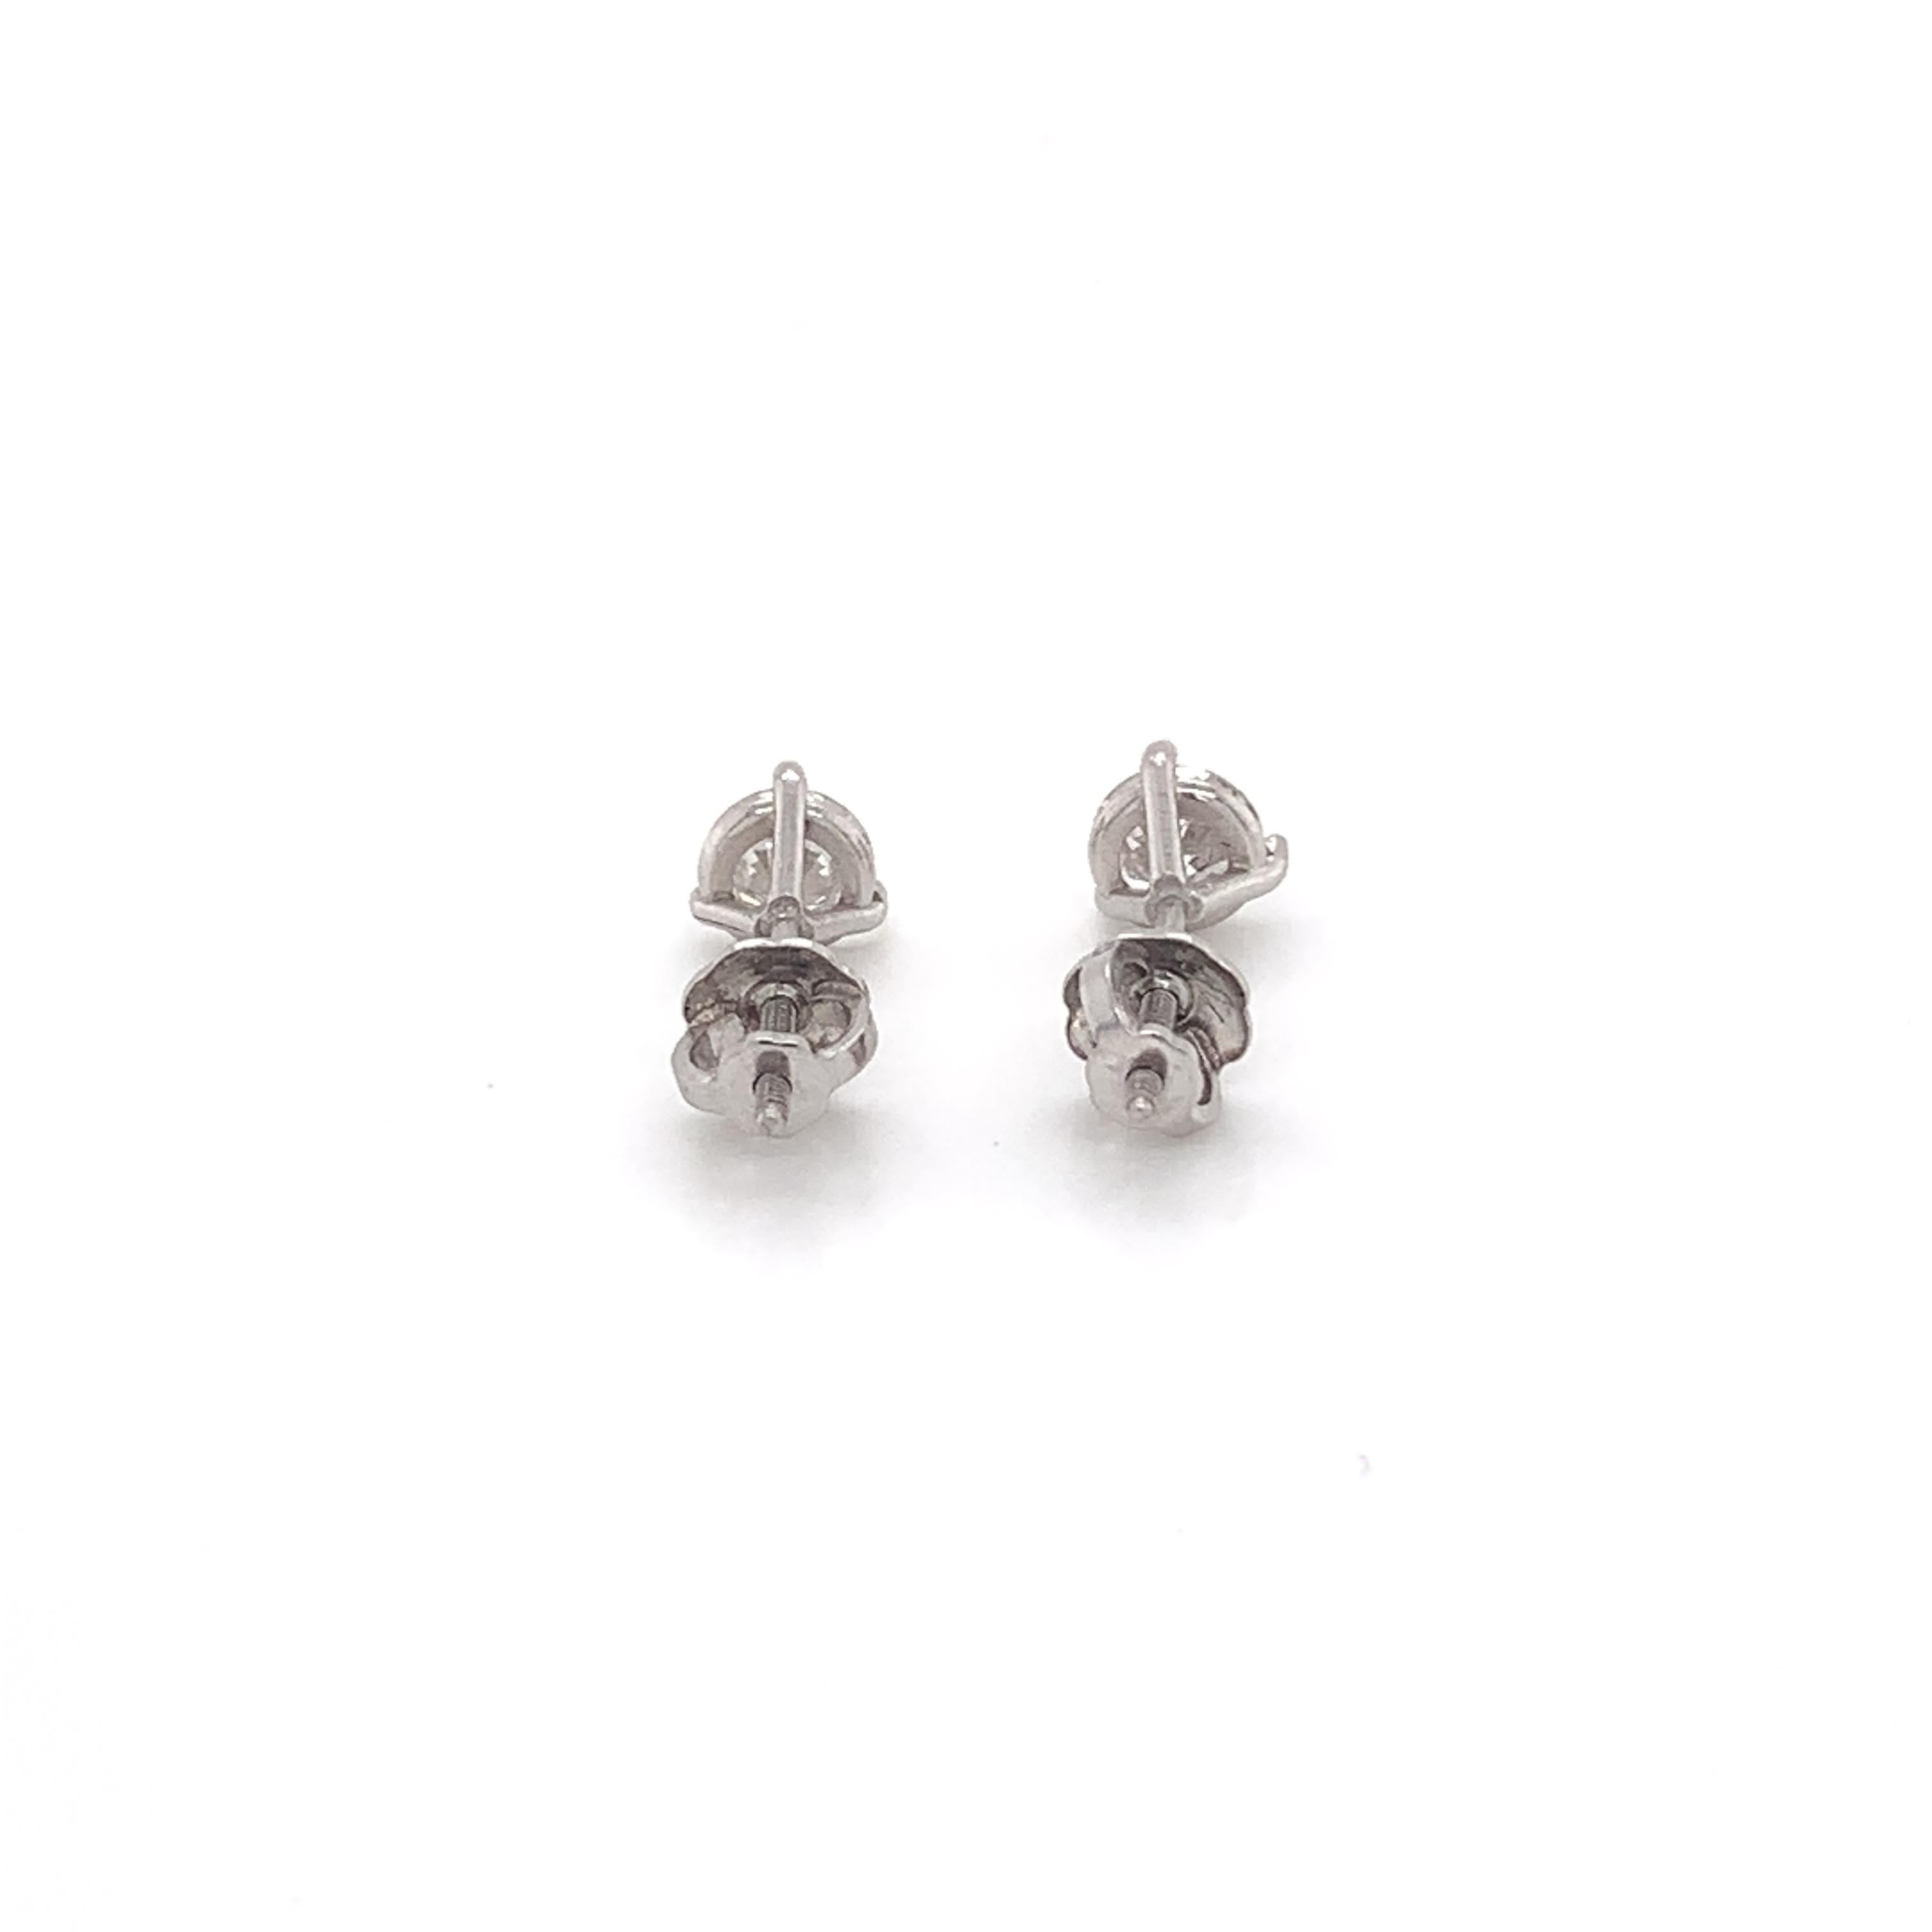 Brilliant Cut 0.80 Carat Diamond Stud Earrings